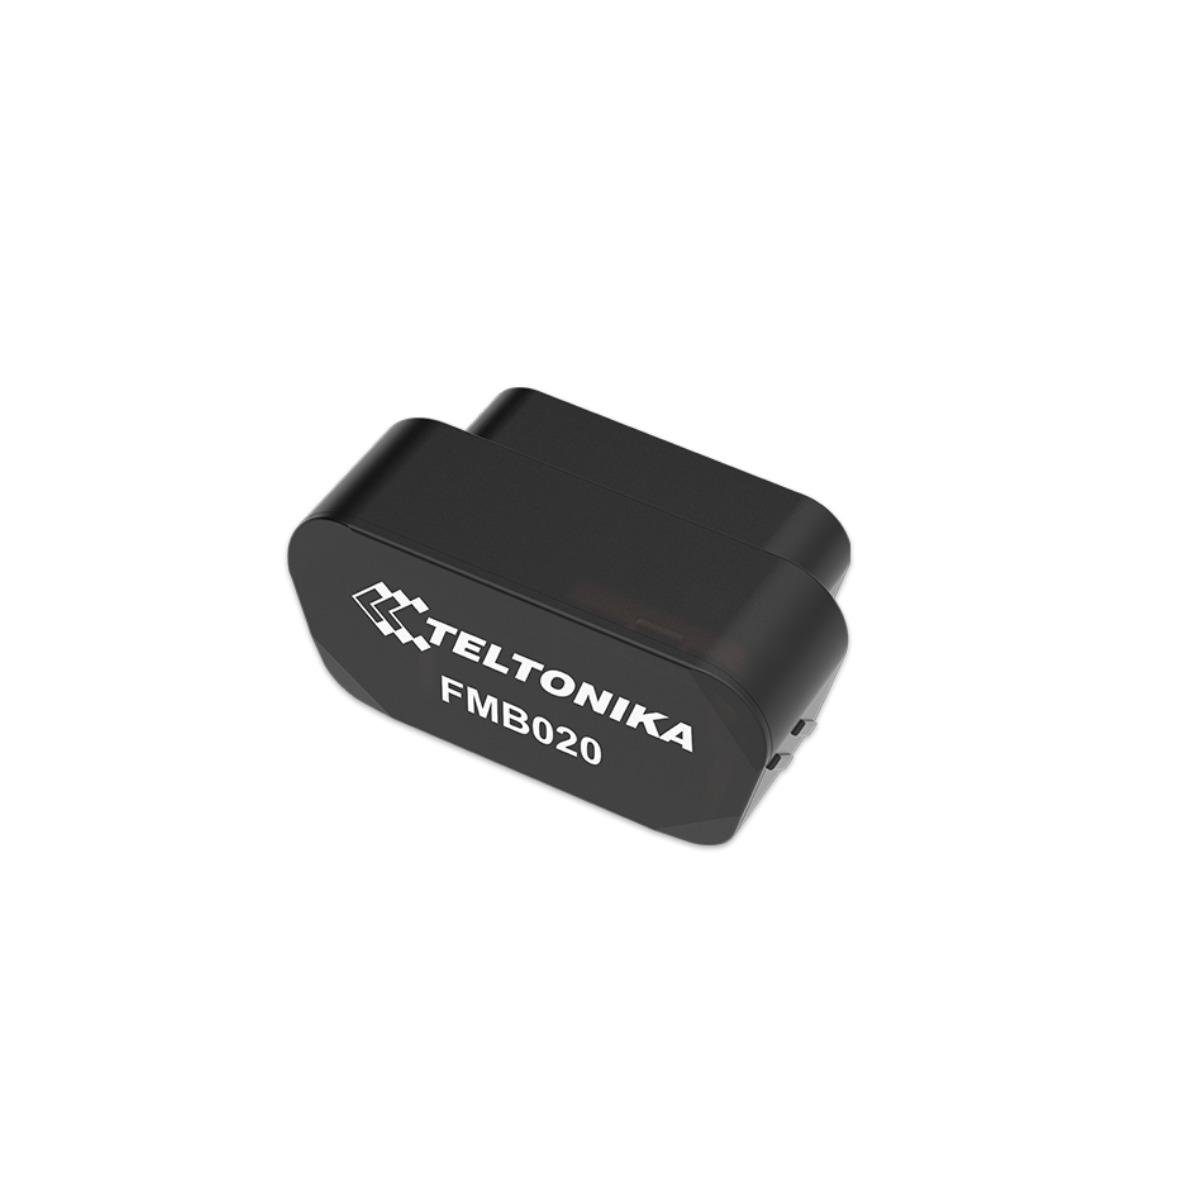 Kleines Teltonika OBD-Tracking-Terminal - GPS-Tracker FMB020